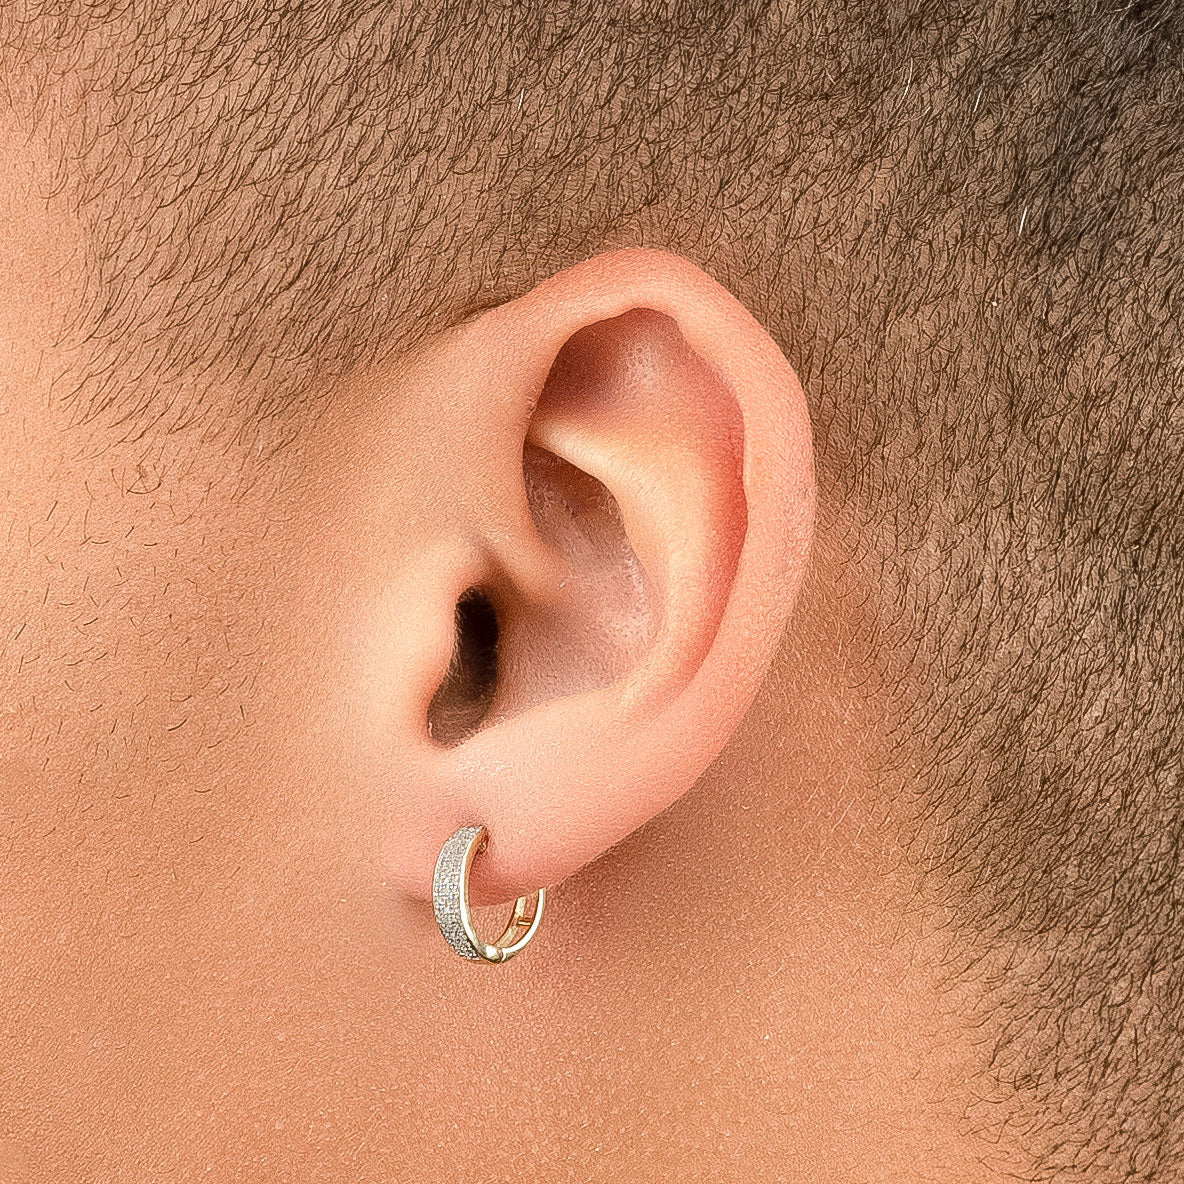 Men's Earring Titanium 3 Stone Matt & Polished Huggie Hinged Hoop Earrings  - Titanium Earrings at Elma UK Jewellery